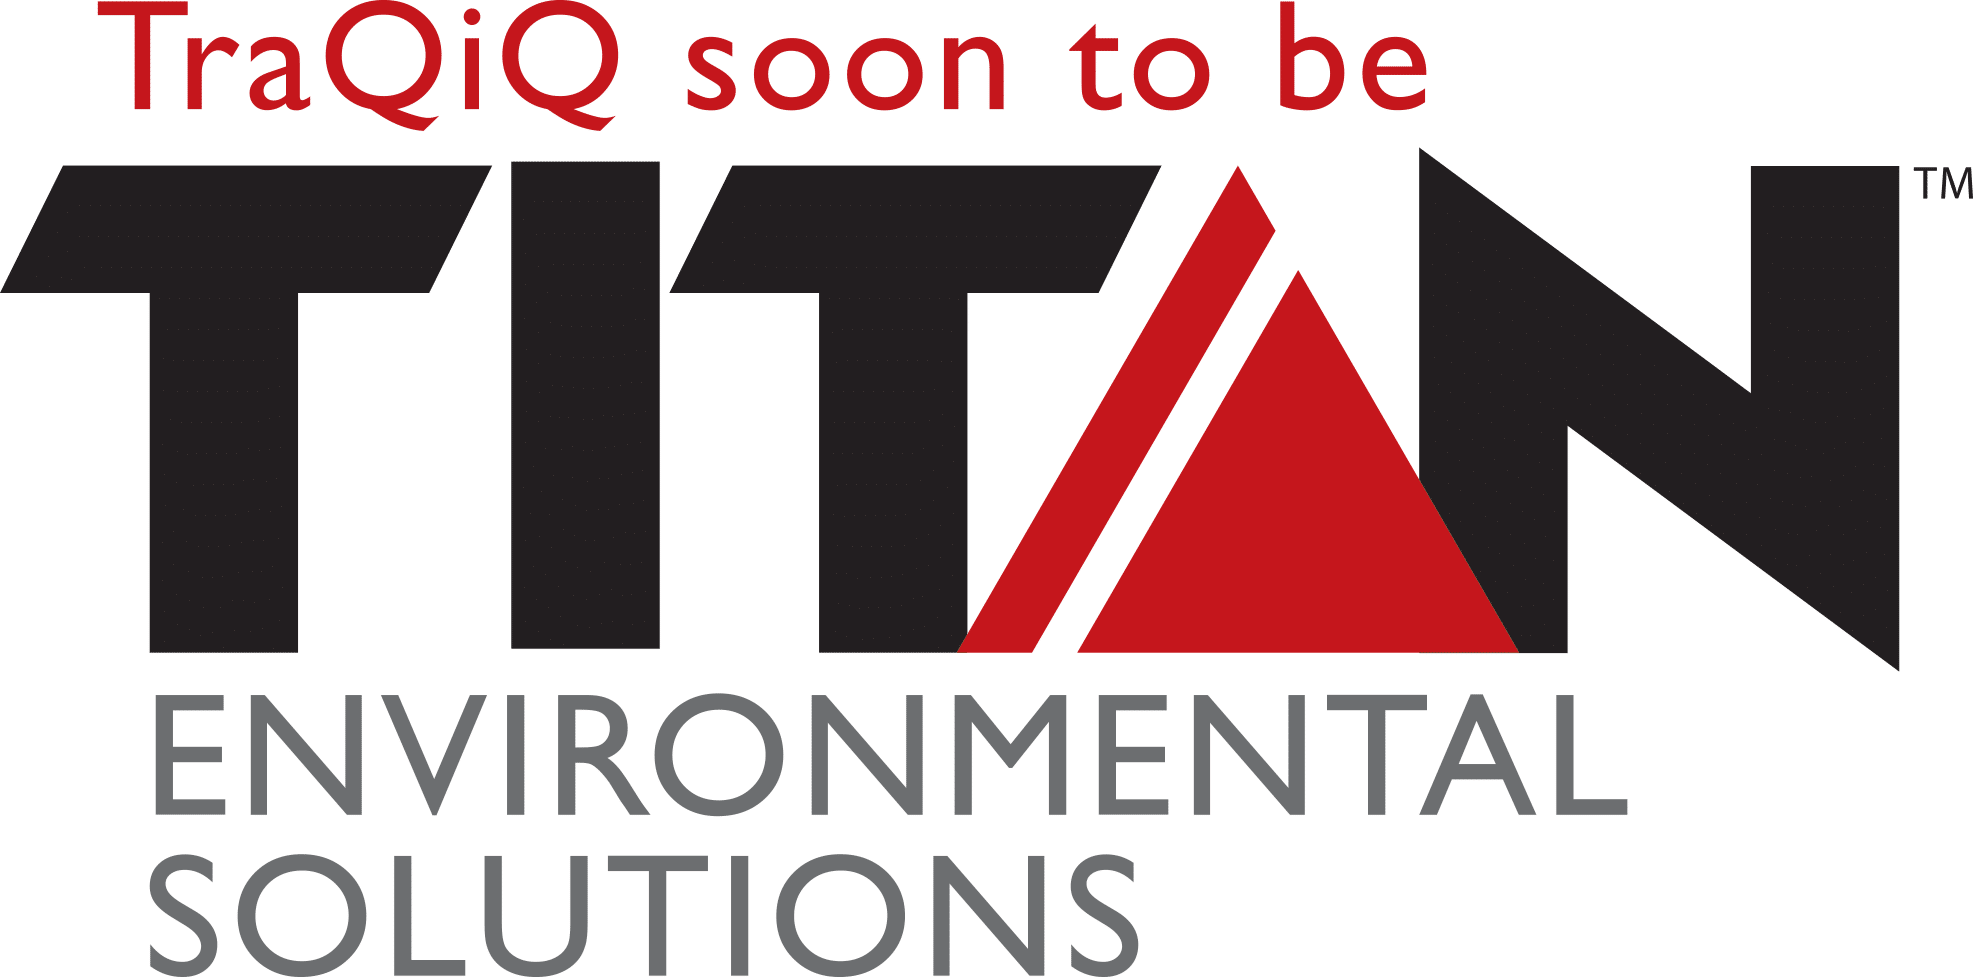 Titan Environmental Logo with TraqIq soon to be text above it.